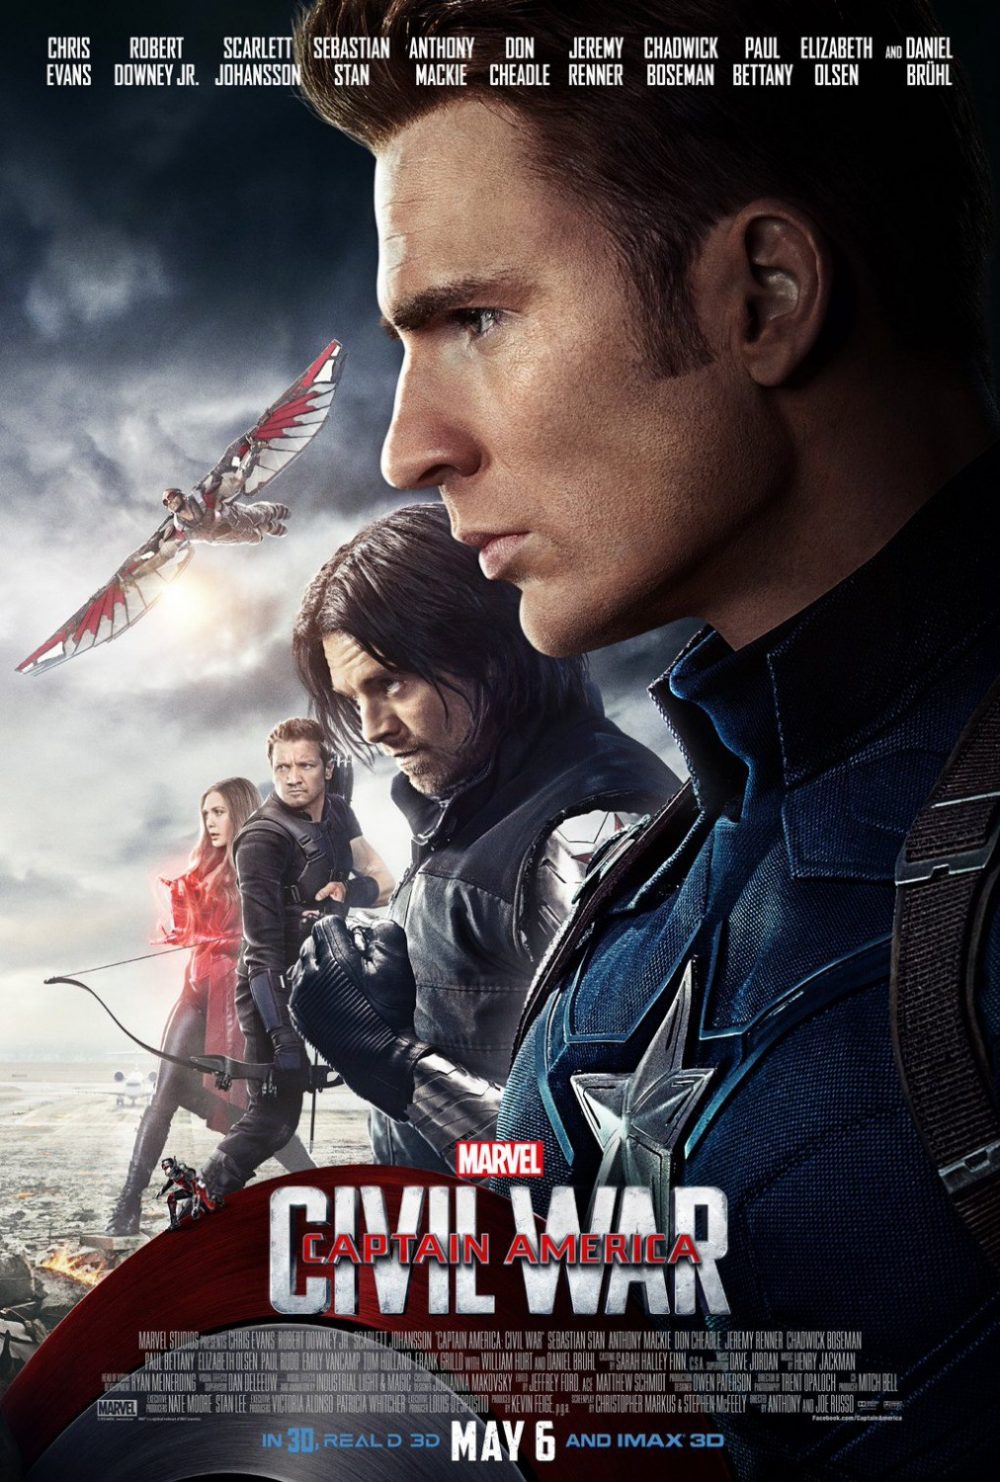 Hinh anh cua team captain e1584948662236 - "Captain America: Civil War": Khi đồng đội hóa kẻ thù